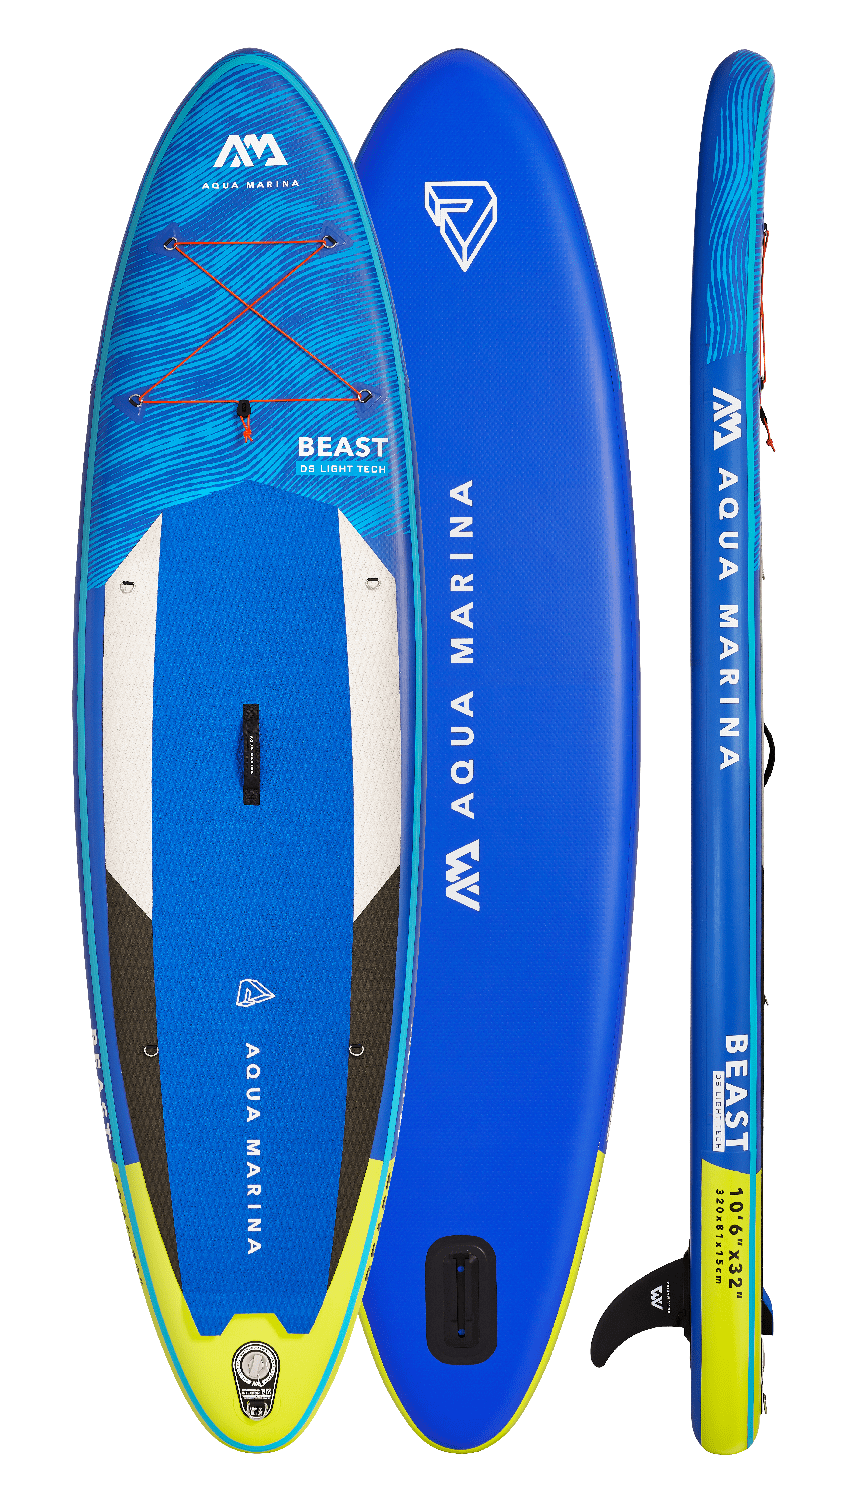 Aqua Marina Beast Inflatable SUP 6